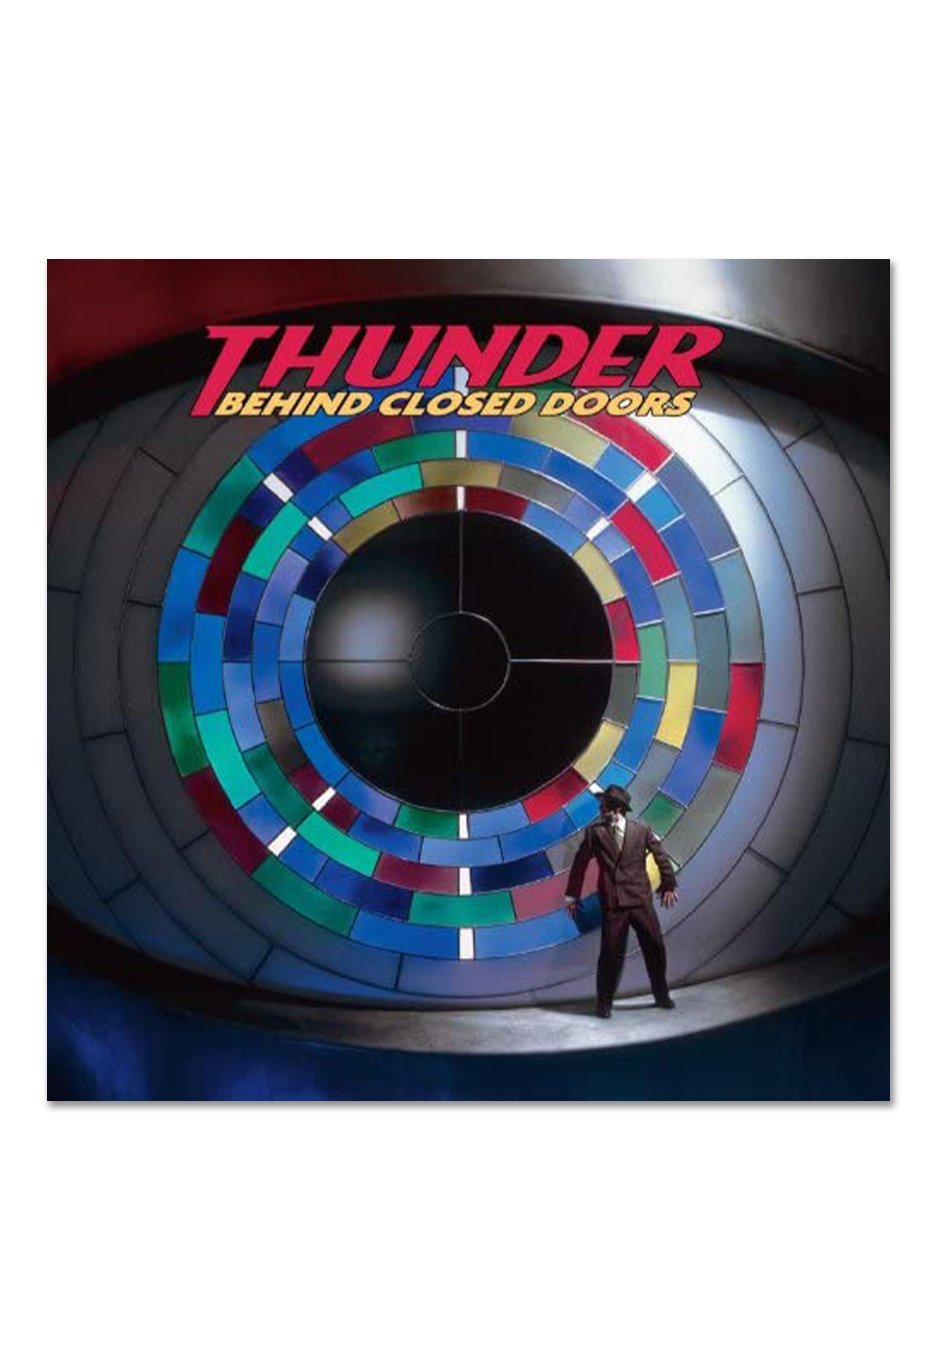 Thunder - Behind Closed Doors (Expanded Version) - Digipak CD